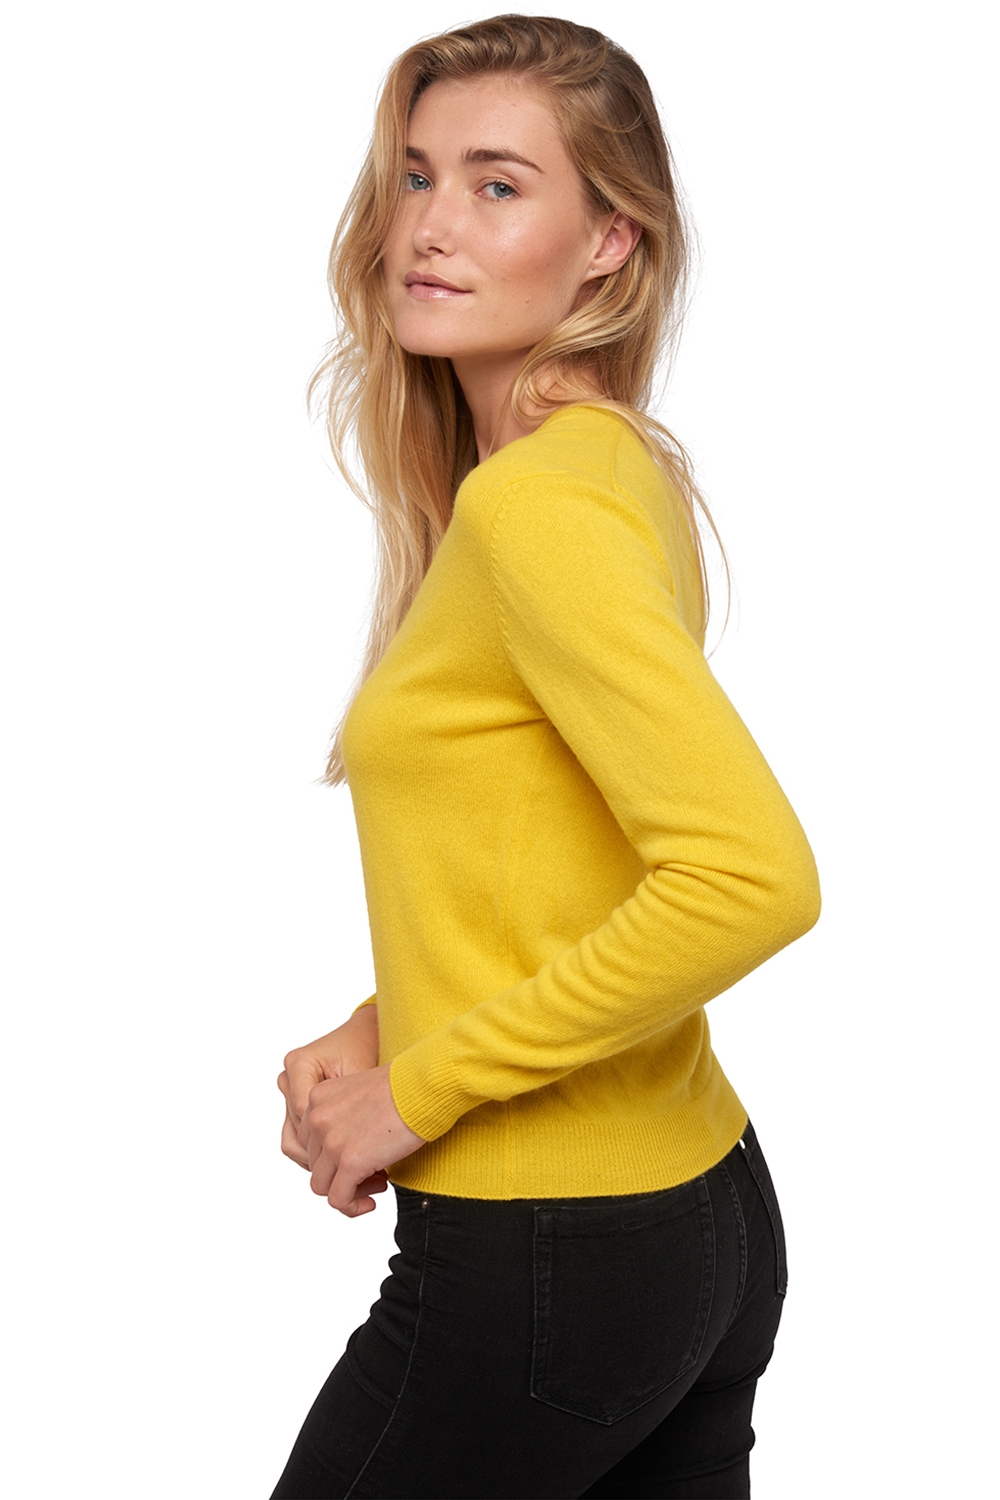 Cashmere donna essenziali low cost taline sunny yellow m